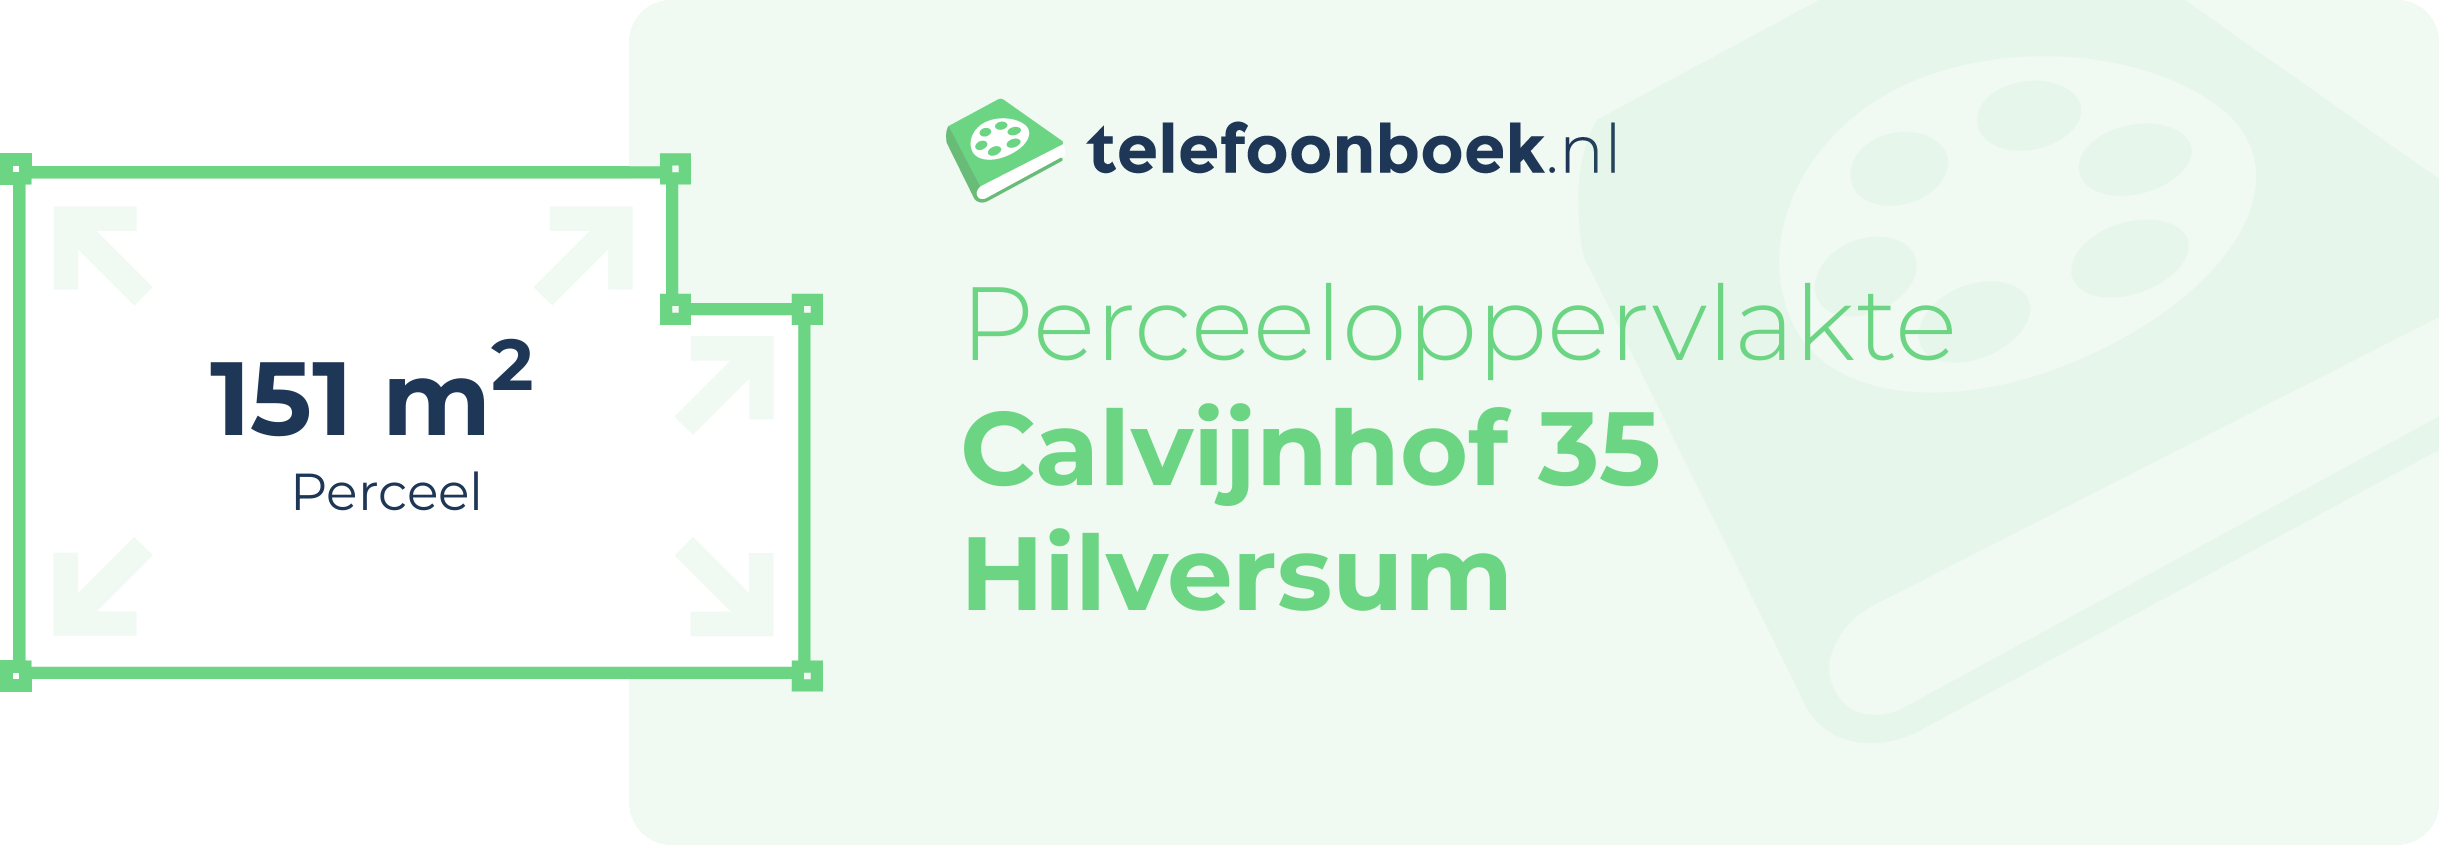 Perceeloppervlakte Calvijnhof 35 Hilversum